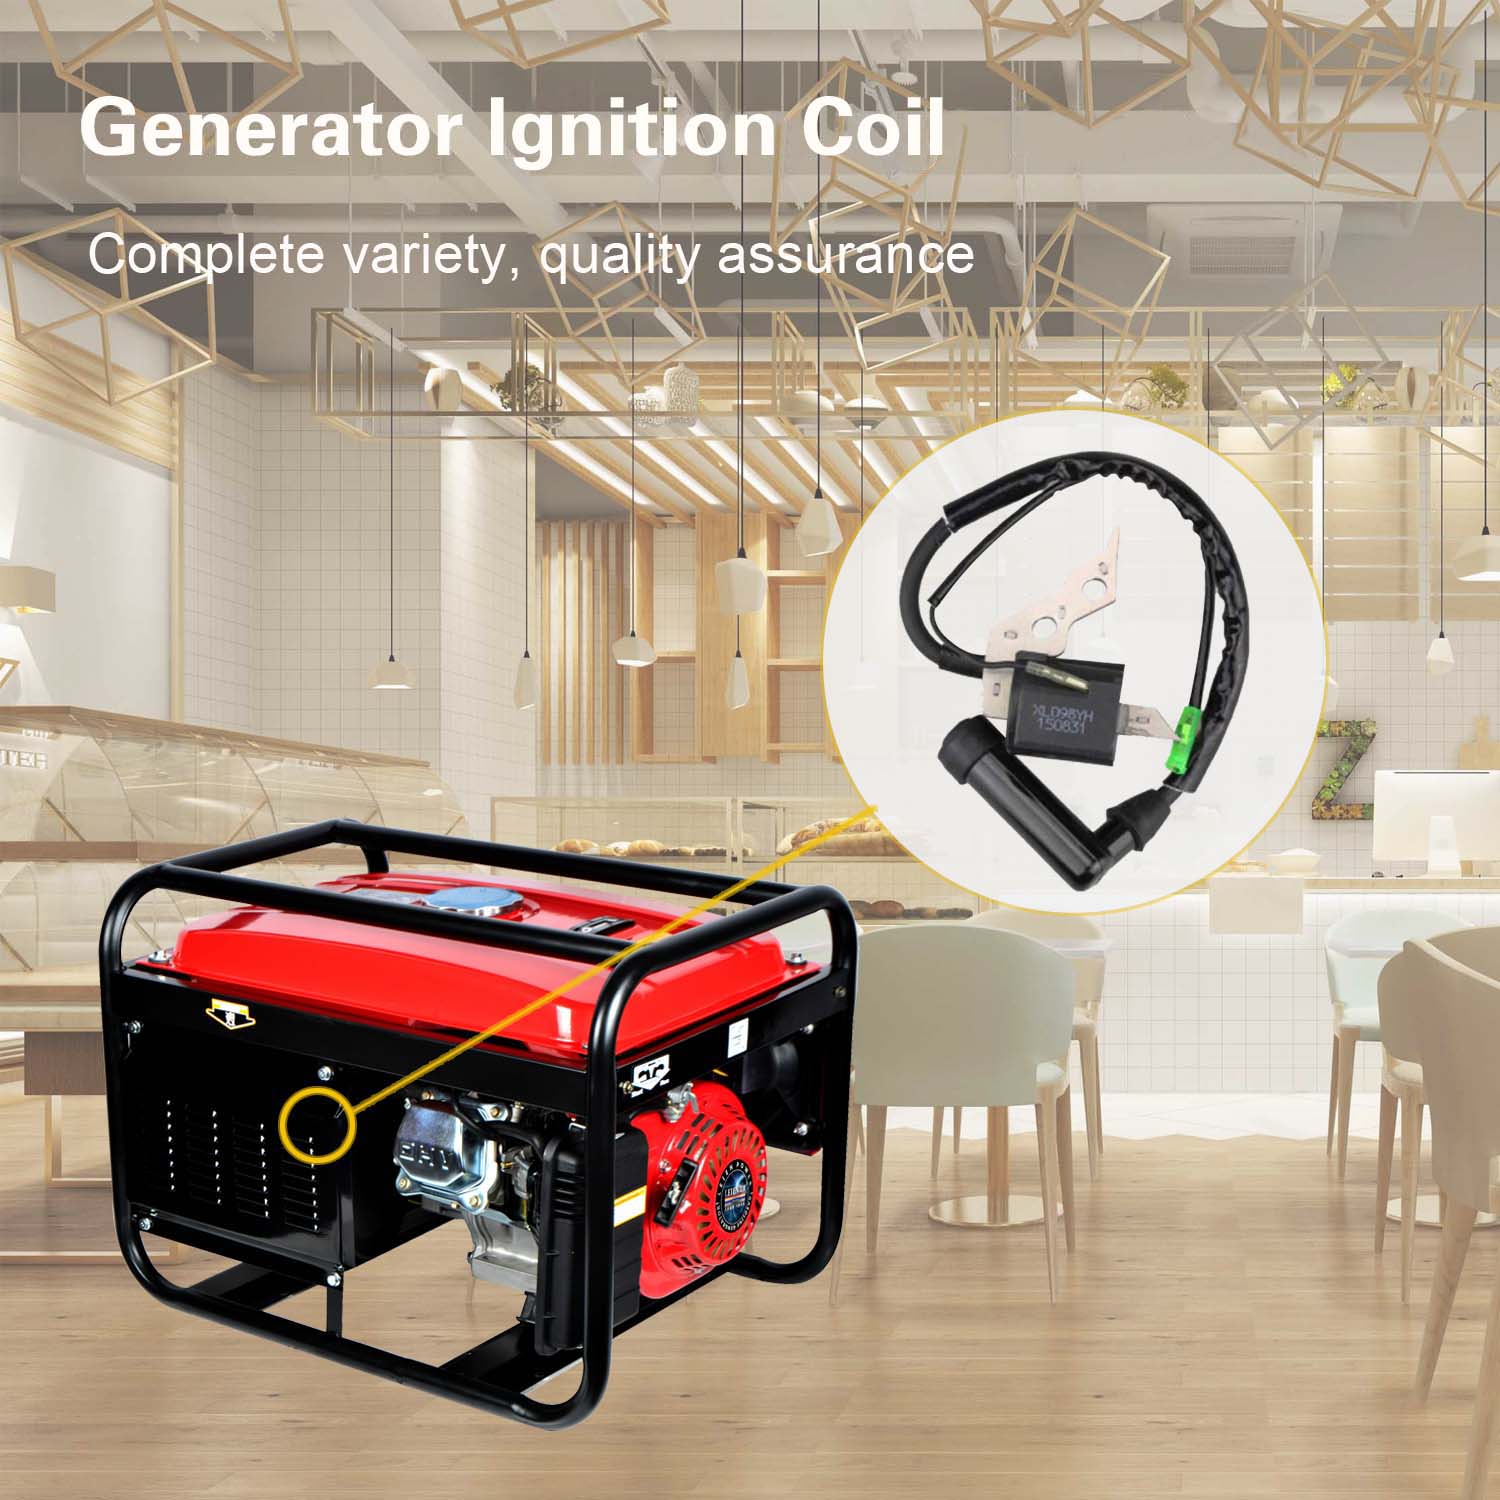 Gasoline generator ignition coil